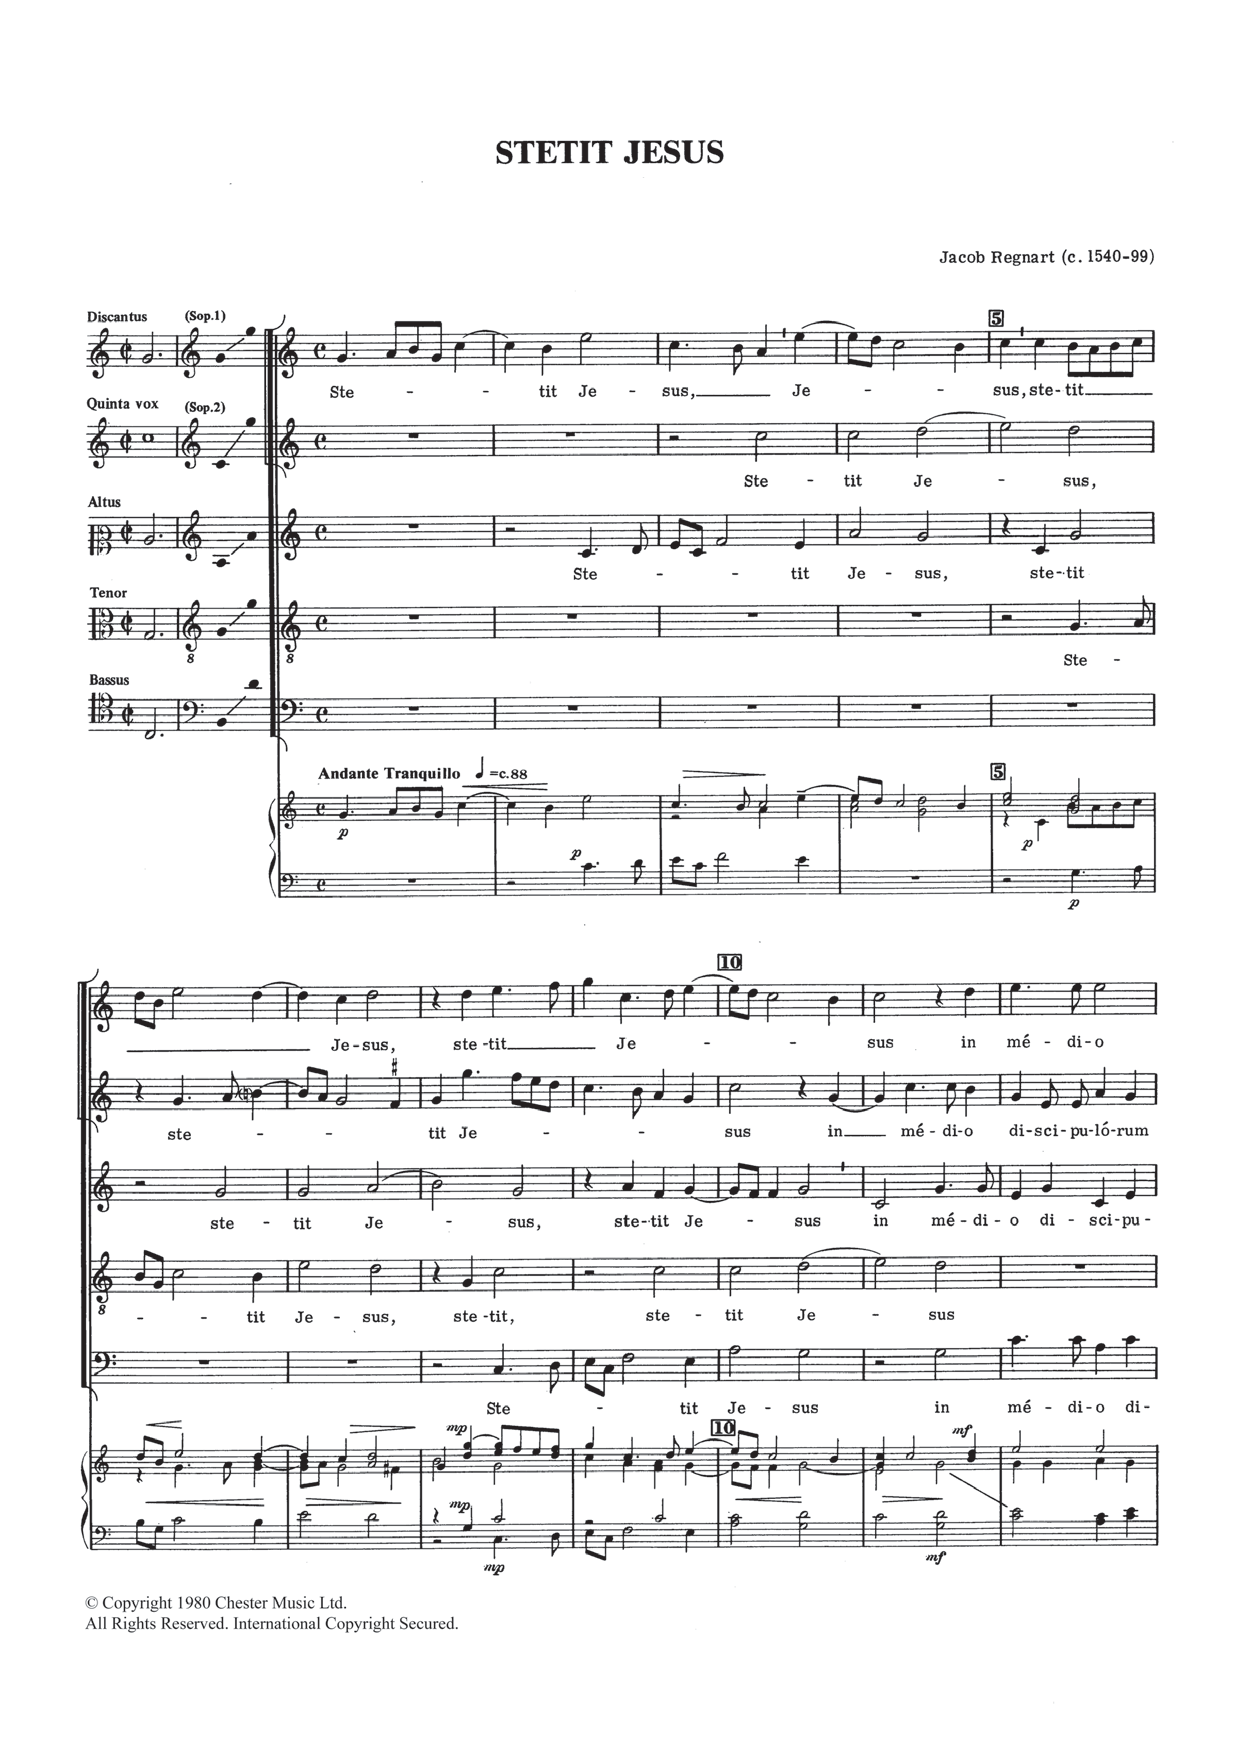 Jacob Regnart Stetit Jesus Sheet Music Notes & Chords for Choral SAATB - Download or Print PDF